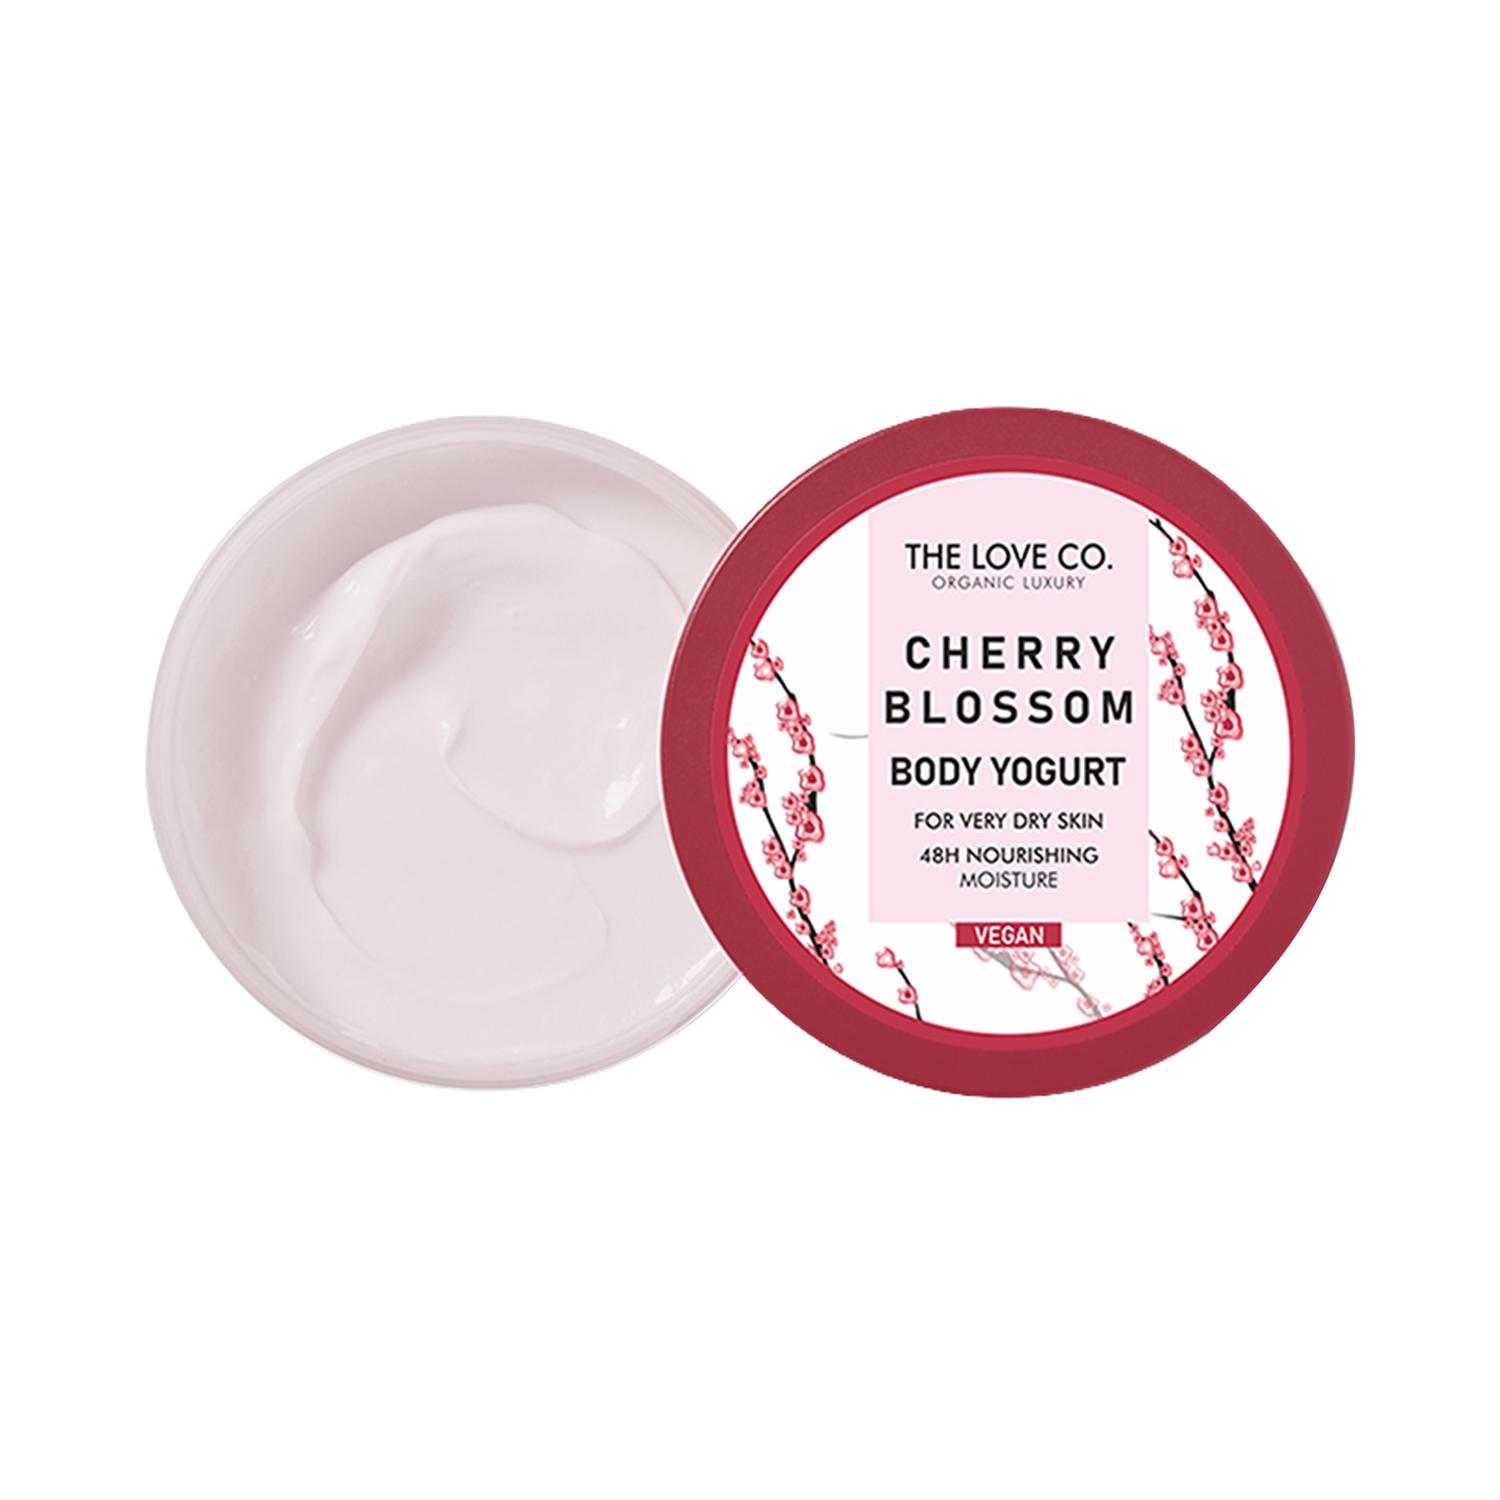 THE LOVE CO. | THE LOVE CO. Japanese Cherry Blossom Body Yogurt Deep Moisturization With Pure Shea Butter (200g)